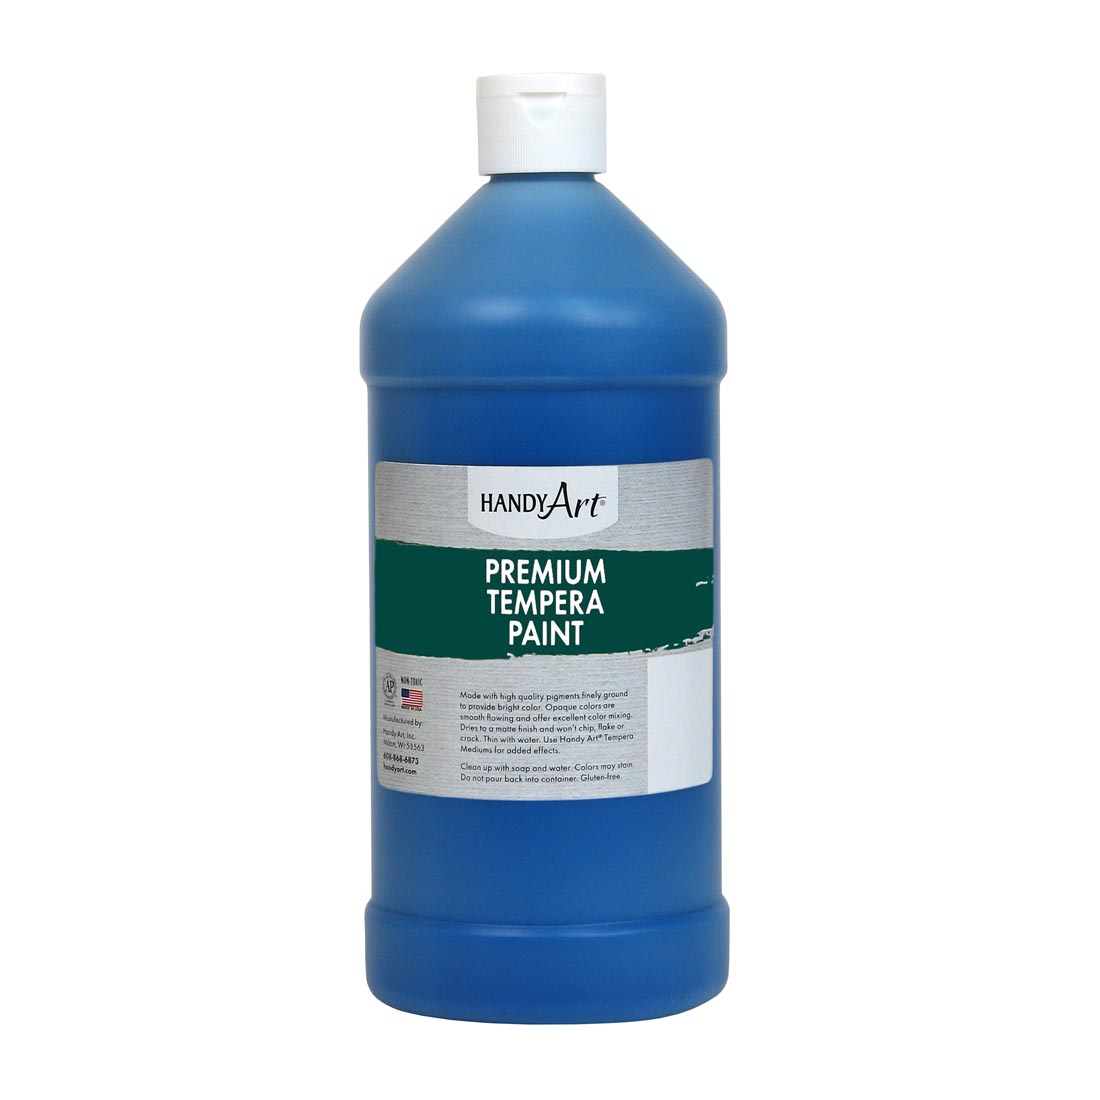 Quart bottle of Blue Handy Art Premium Tempera Paint